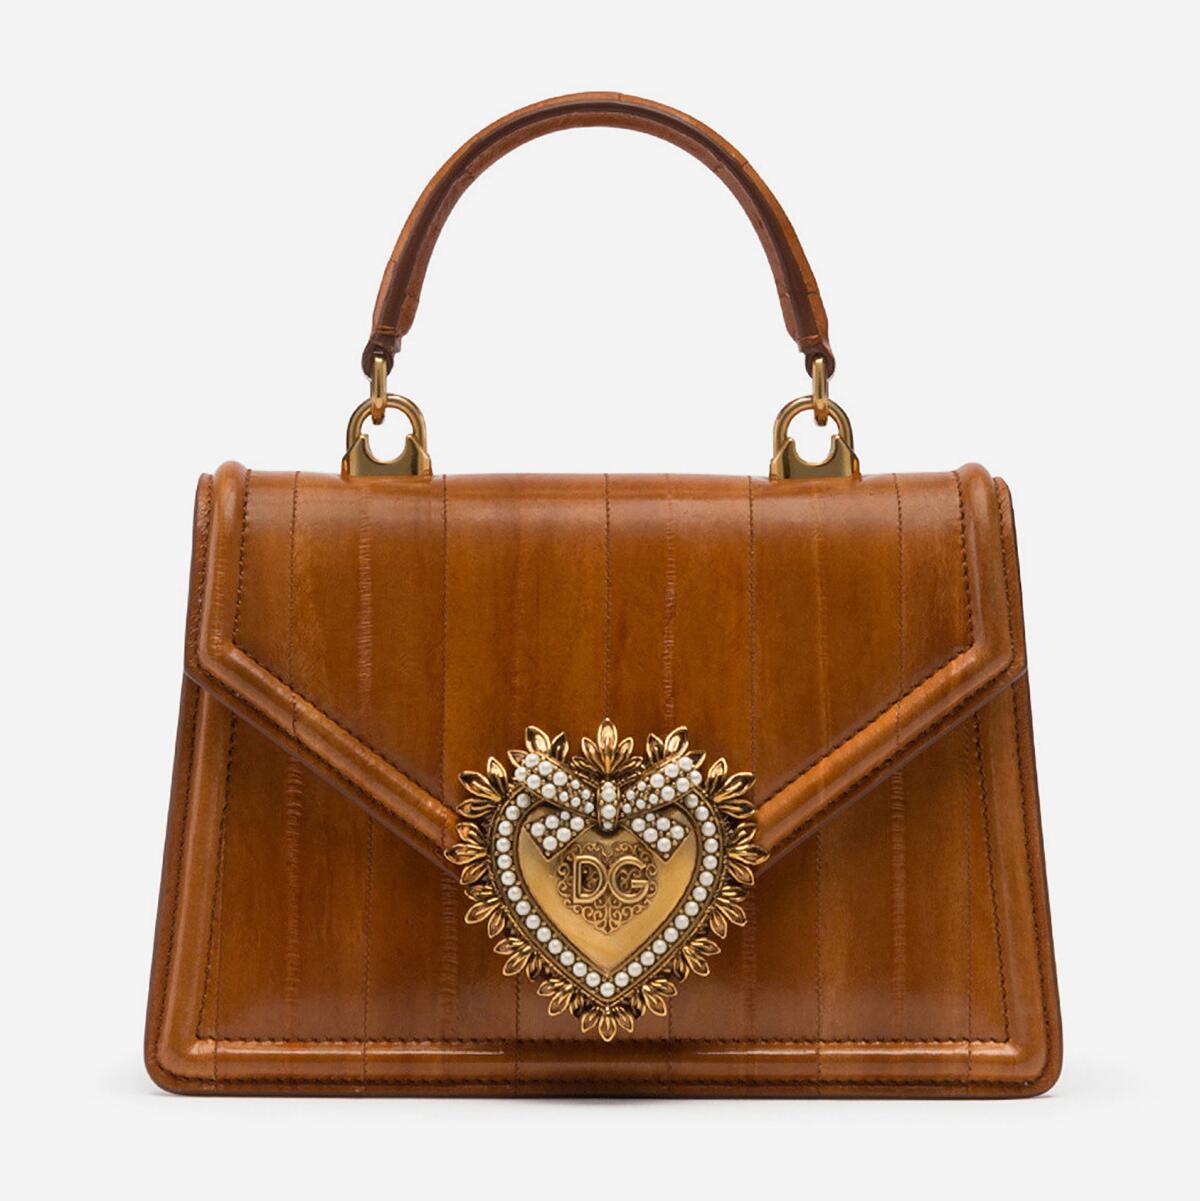 Dolce & Gabbana's small Devotion bag in eel.